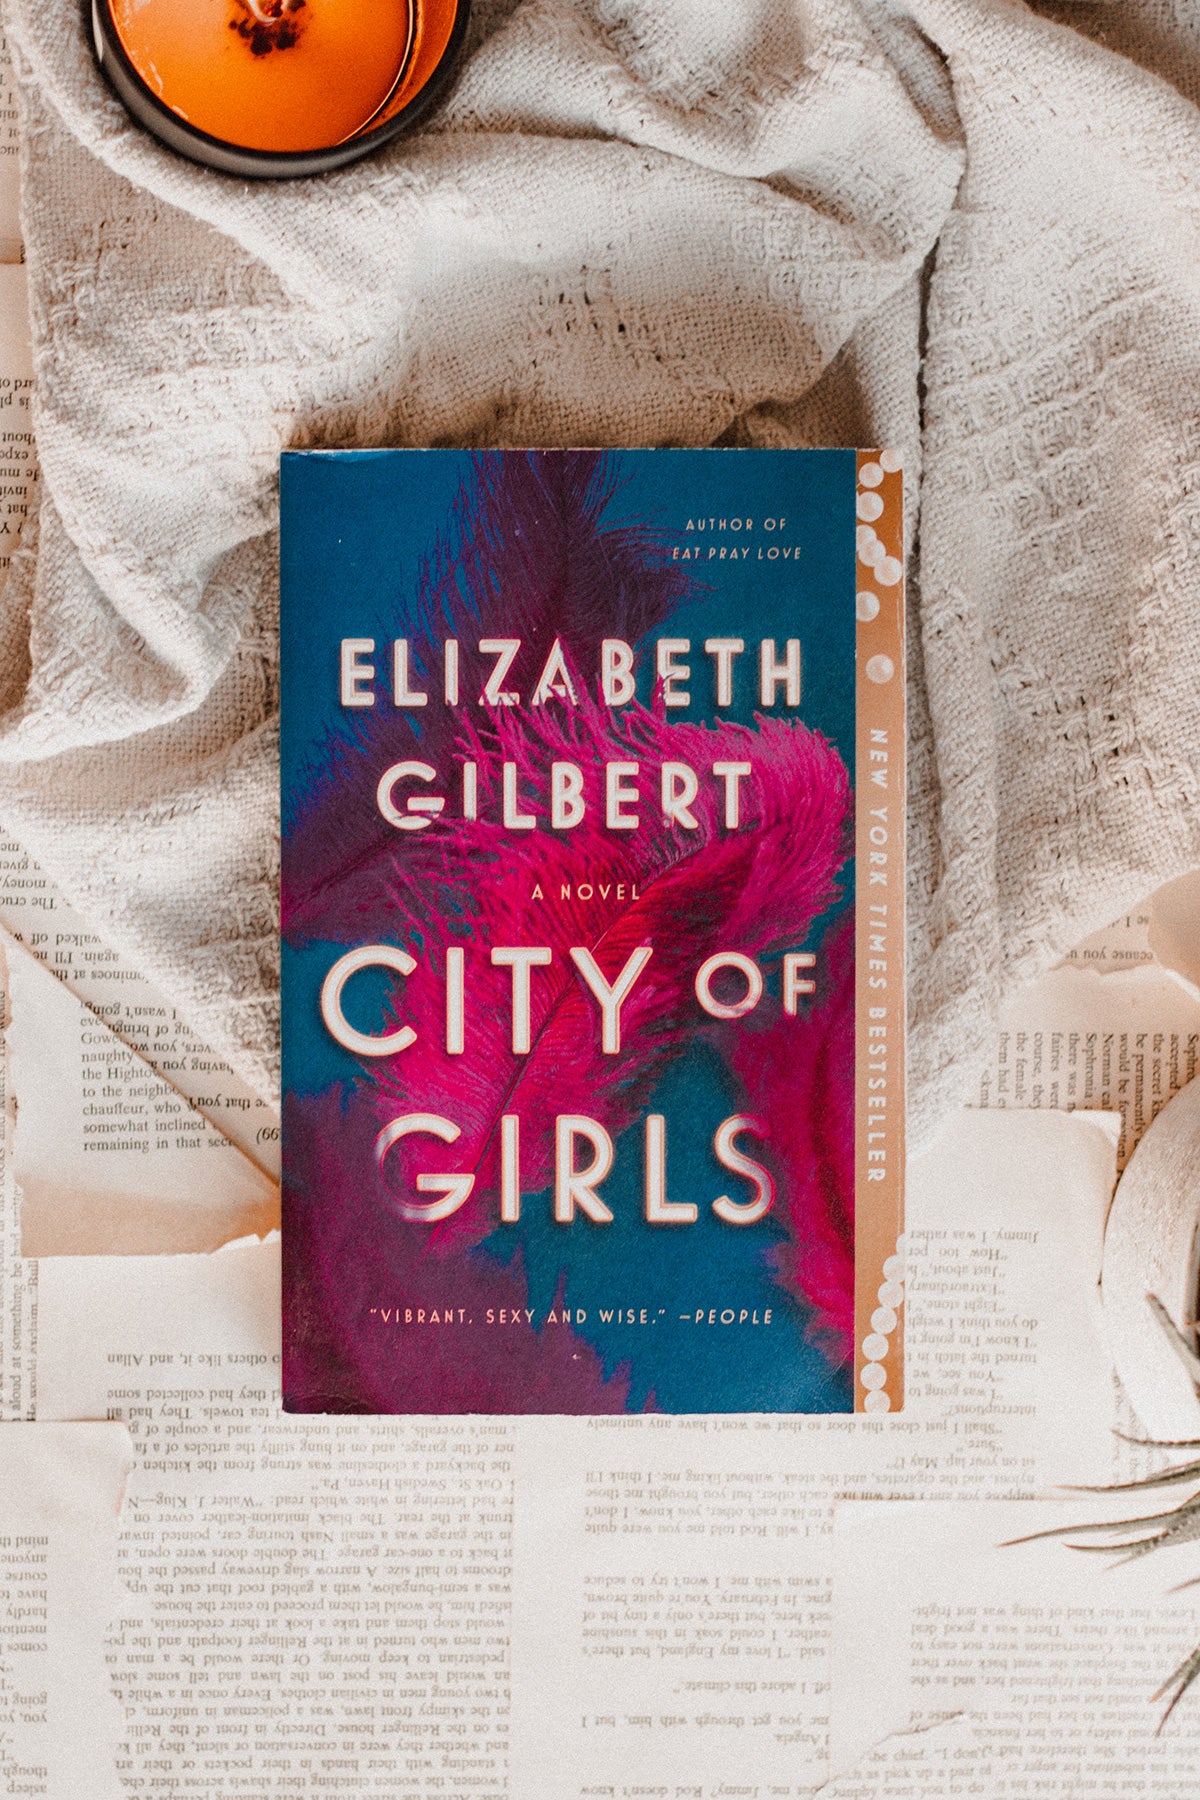 City of Girls by Elizabeth Gilbert